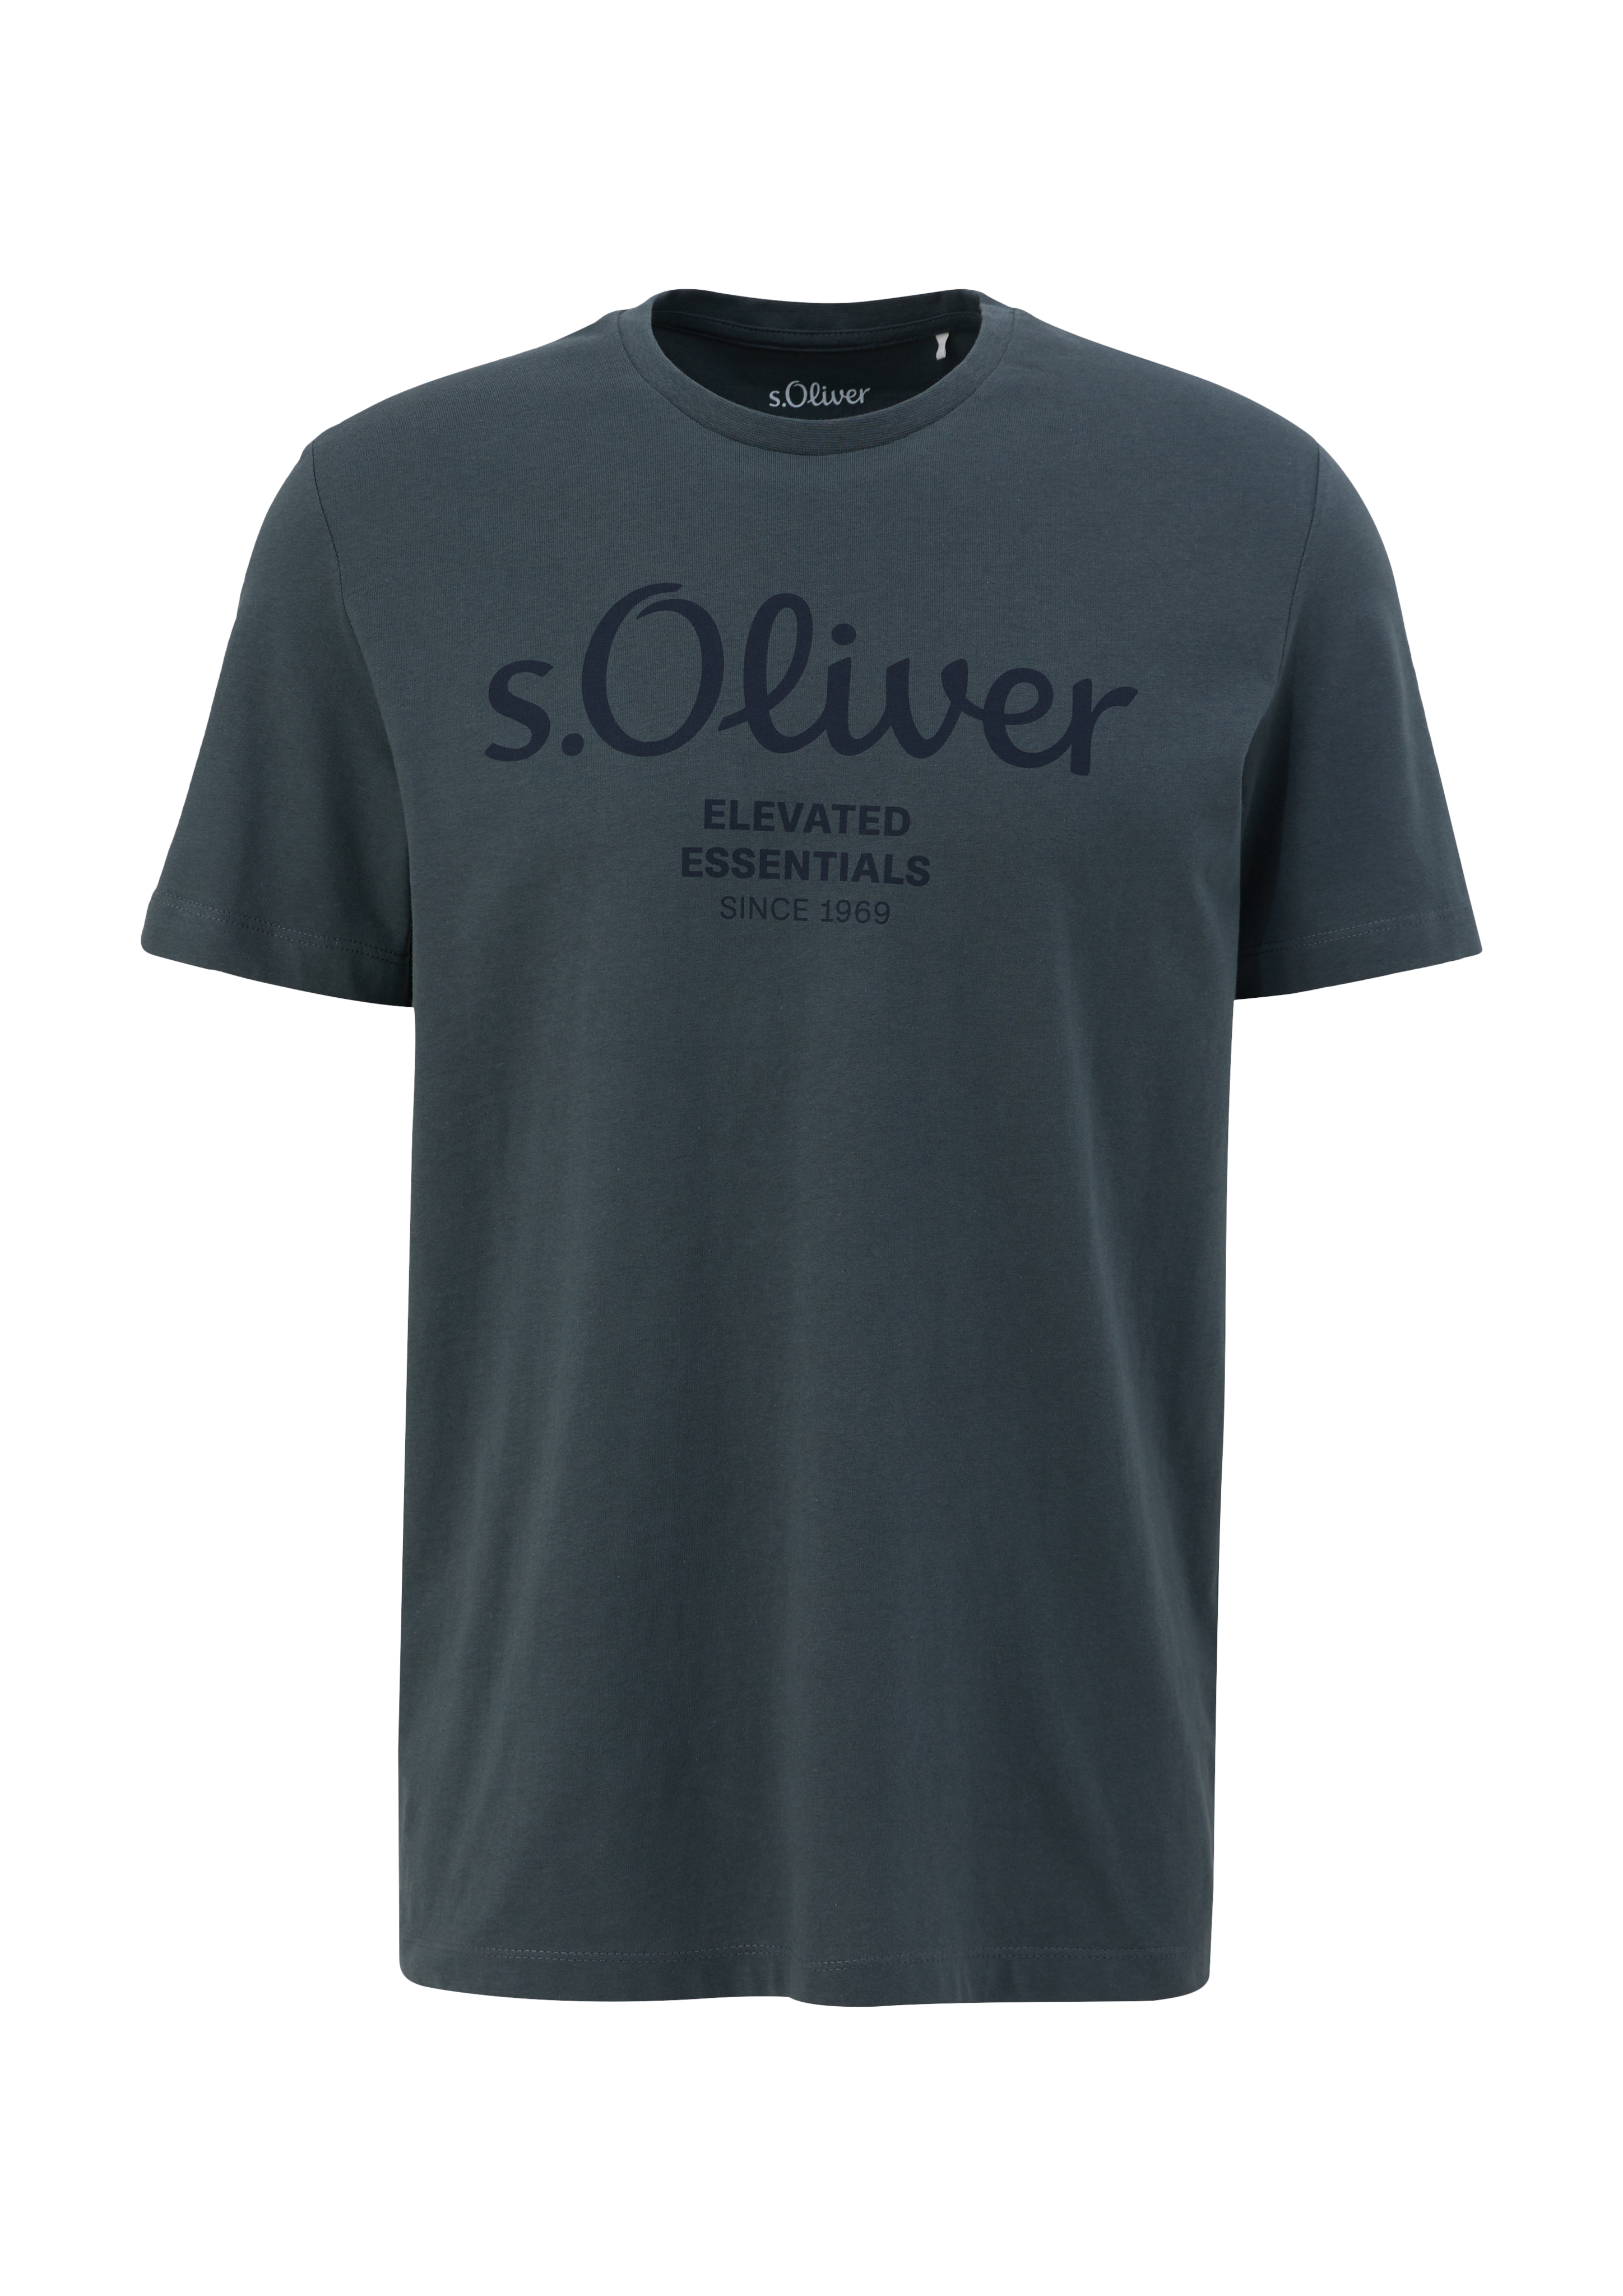 S. Oliver T-Shirt grey place XXL T-Shirt